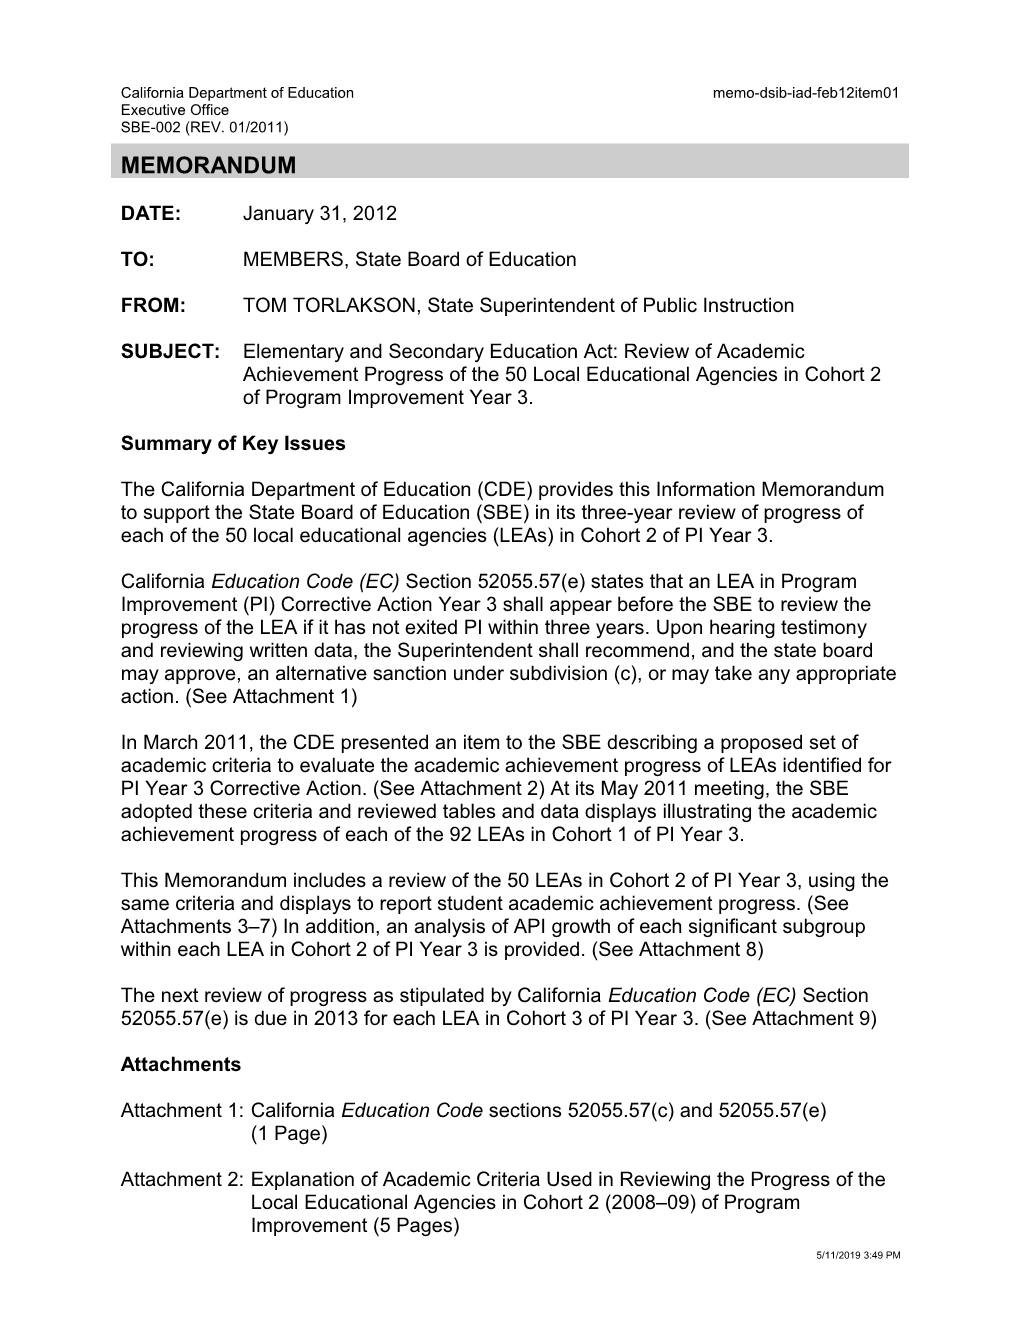 February 2012 Memorandum IAD Item 1 - Information Memorandum (CA State Board of Education)